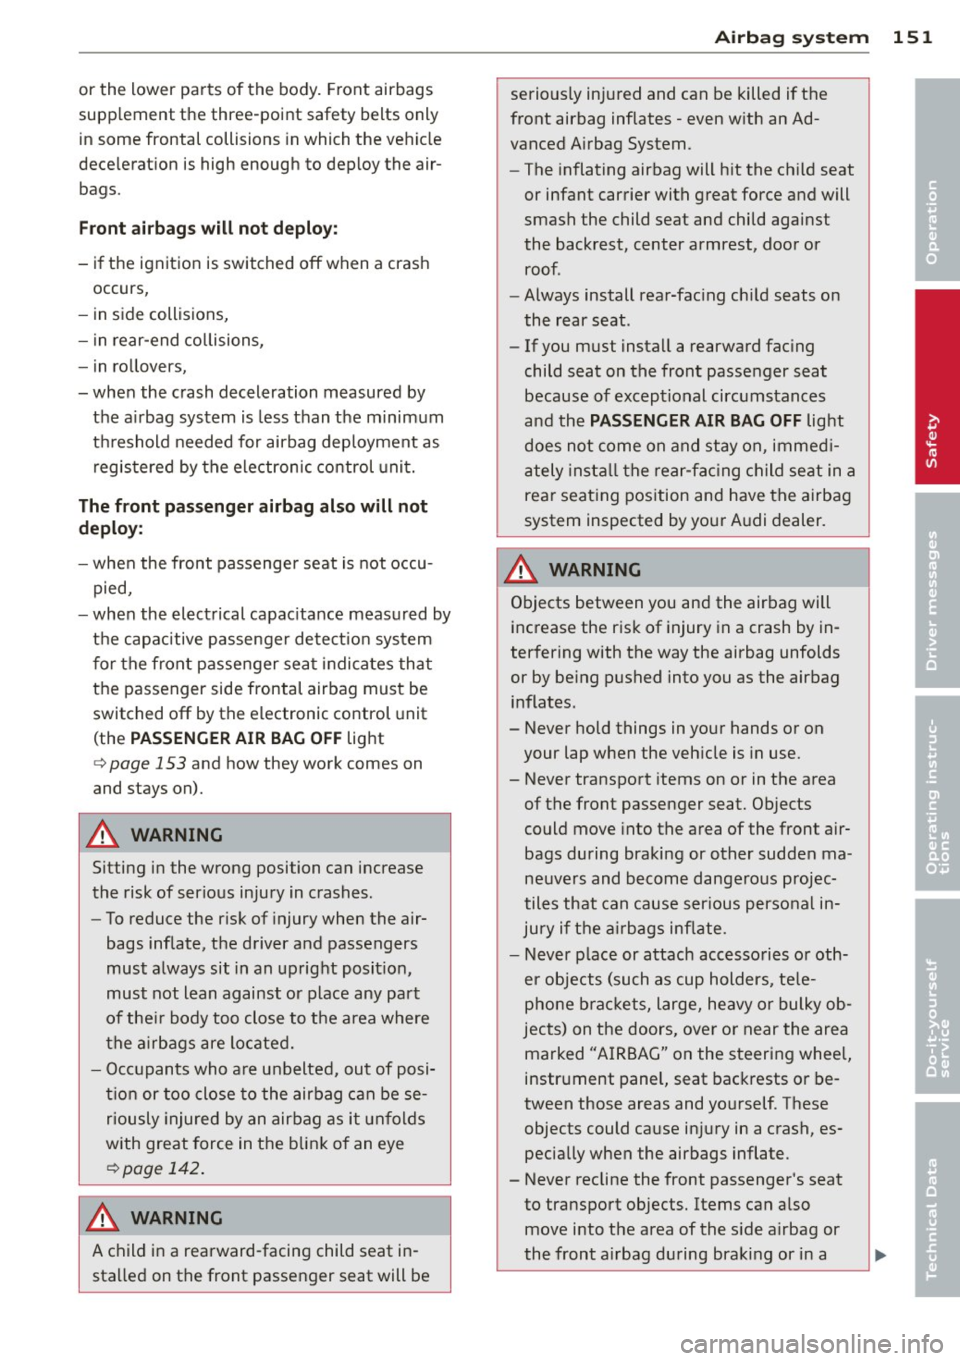 AUDI A3 SEDAN 2015 8V / 3.G Owners Manual 